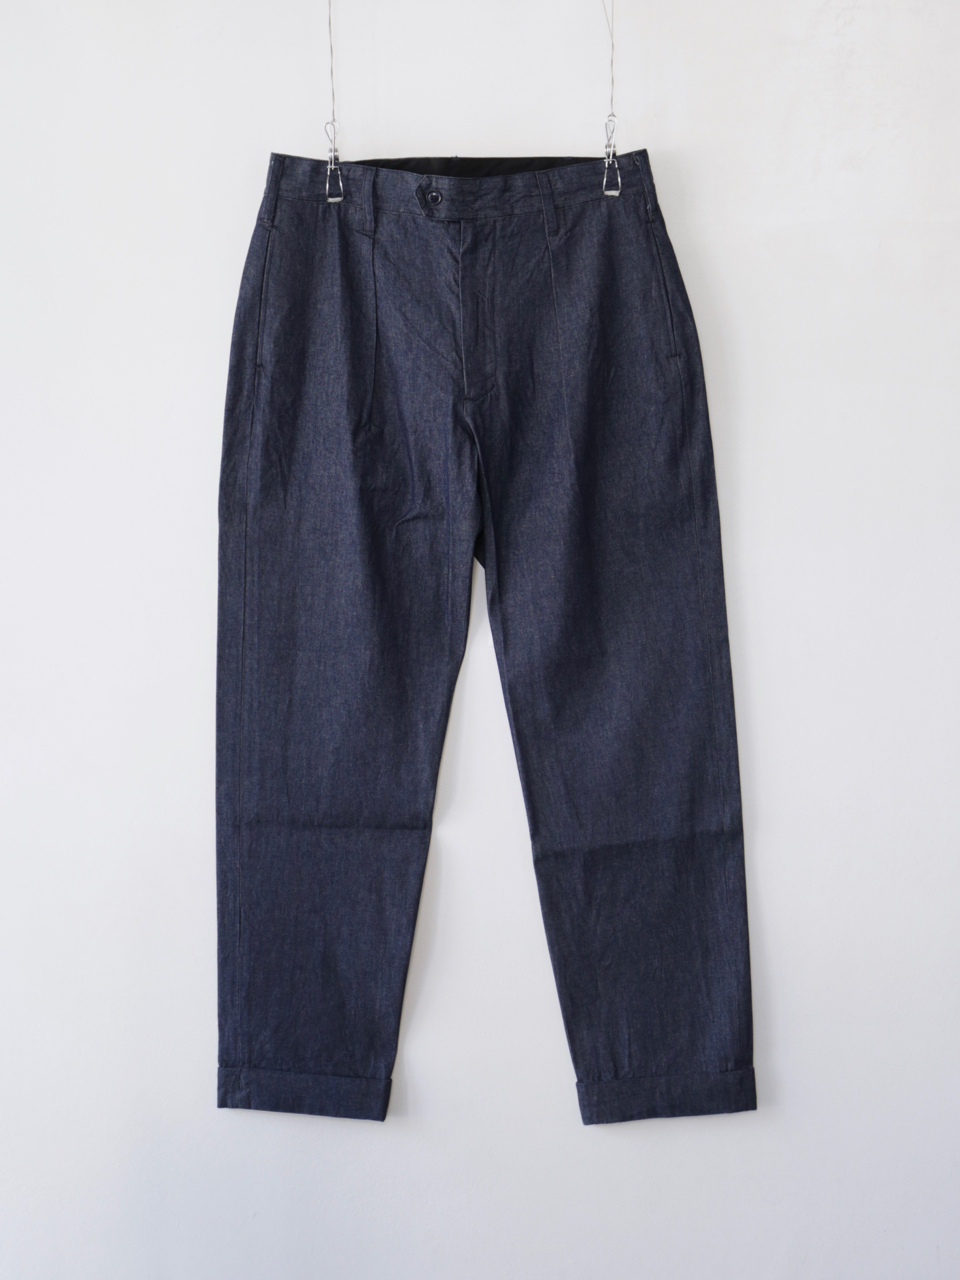 Engineered Garments Carlyle Pant - Industrial 8oz Denim|セレクト 